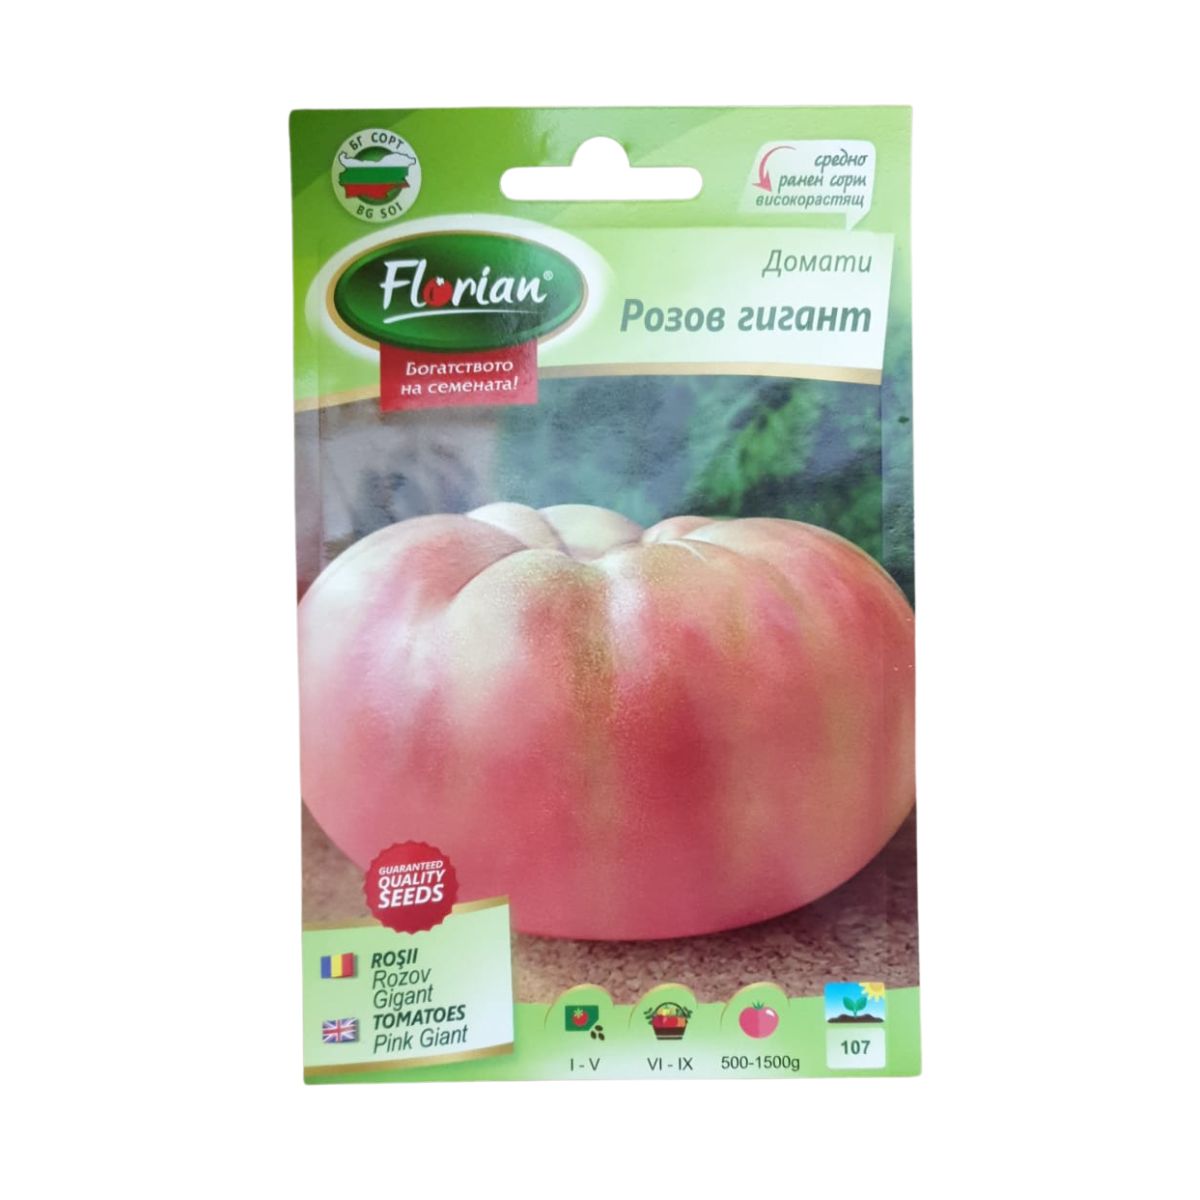 Tomate - Seminte de tomate Gigant Roz, 0.2 grame FLORIAN, hectarul.ro